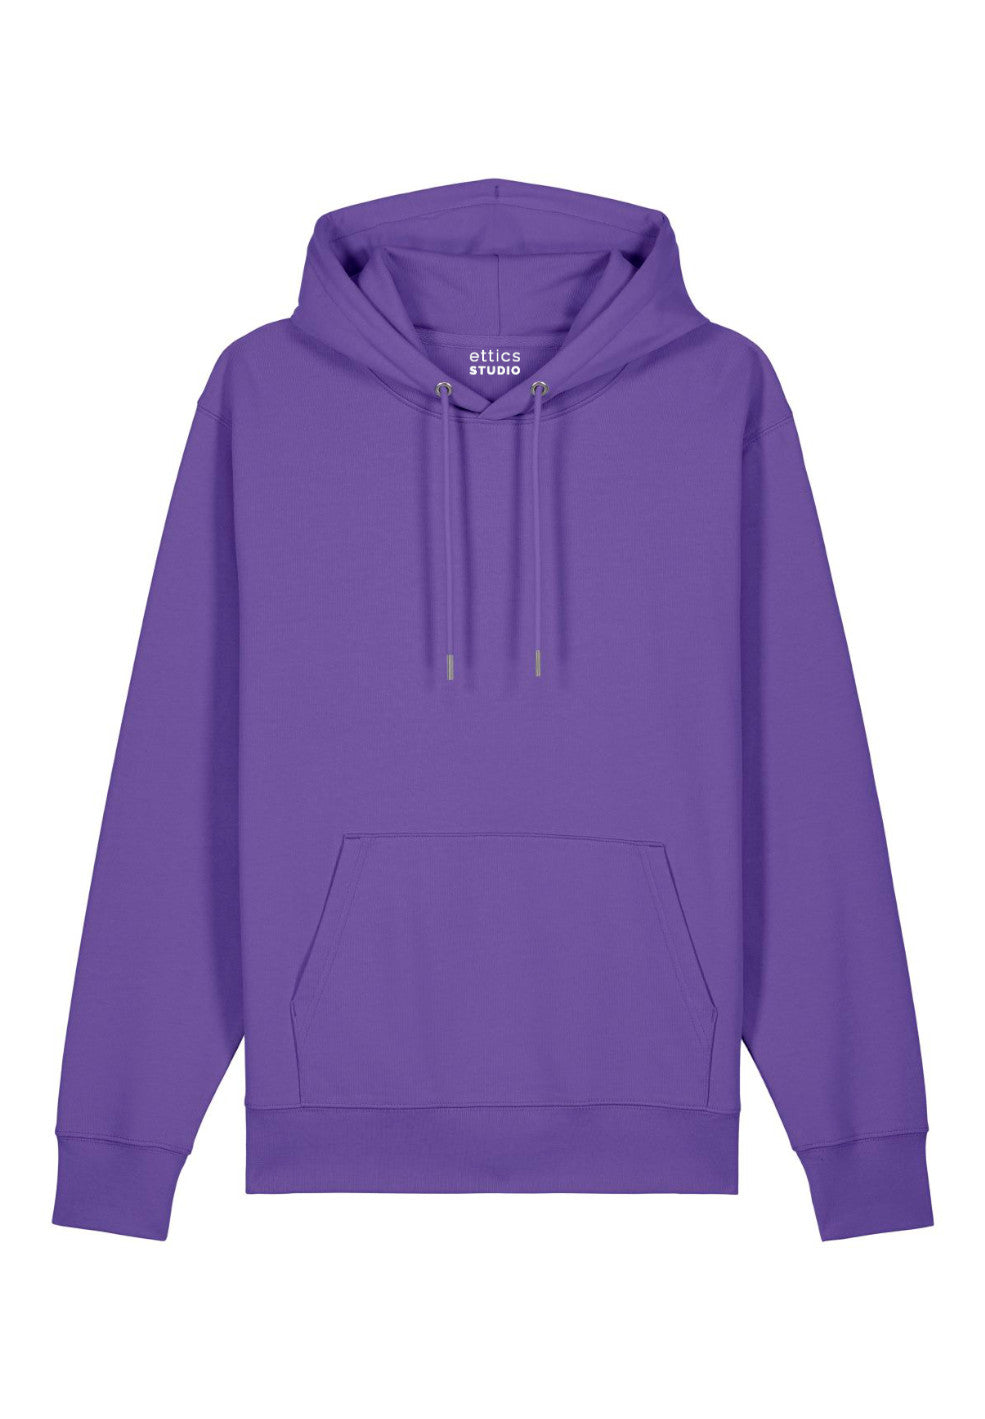 unisex hoodie cruiser purple love